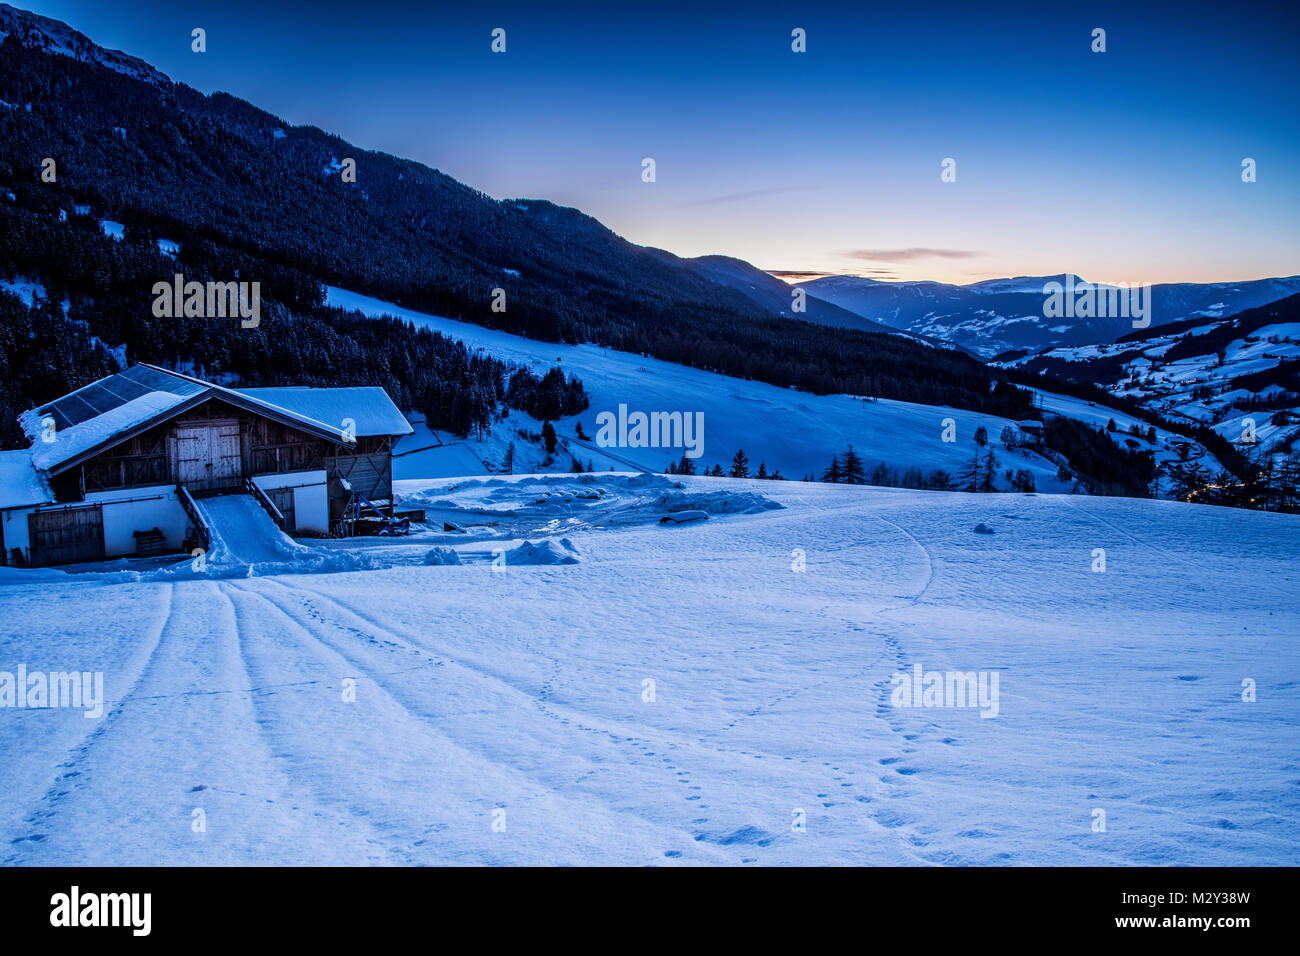 A view towards the village of Santa Maddalena, Province of Bolzano - South Tyrol, Italy on a winter evening Stock Photo